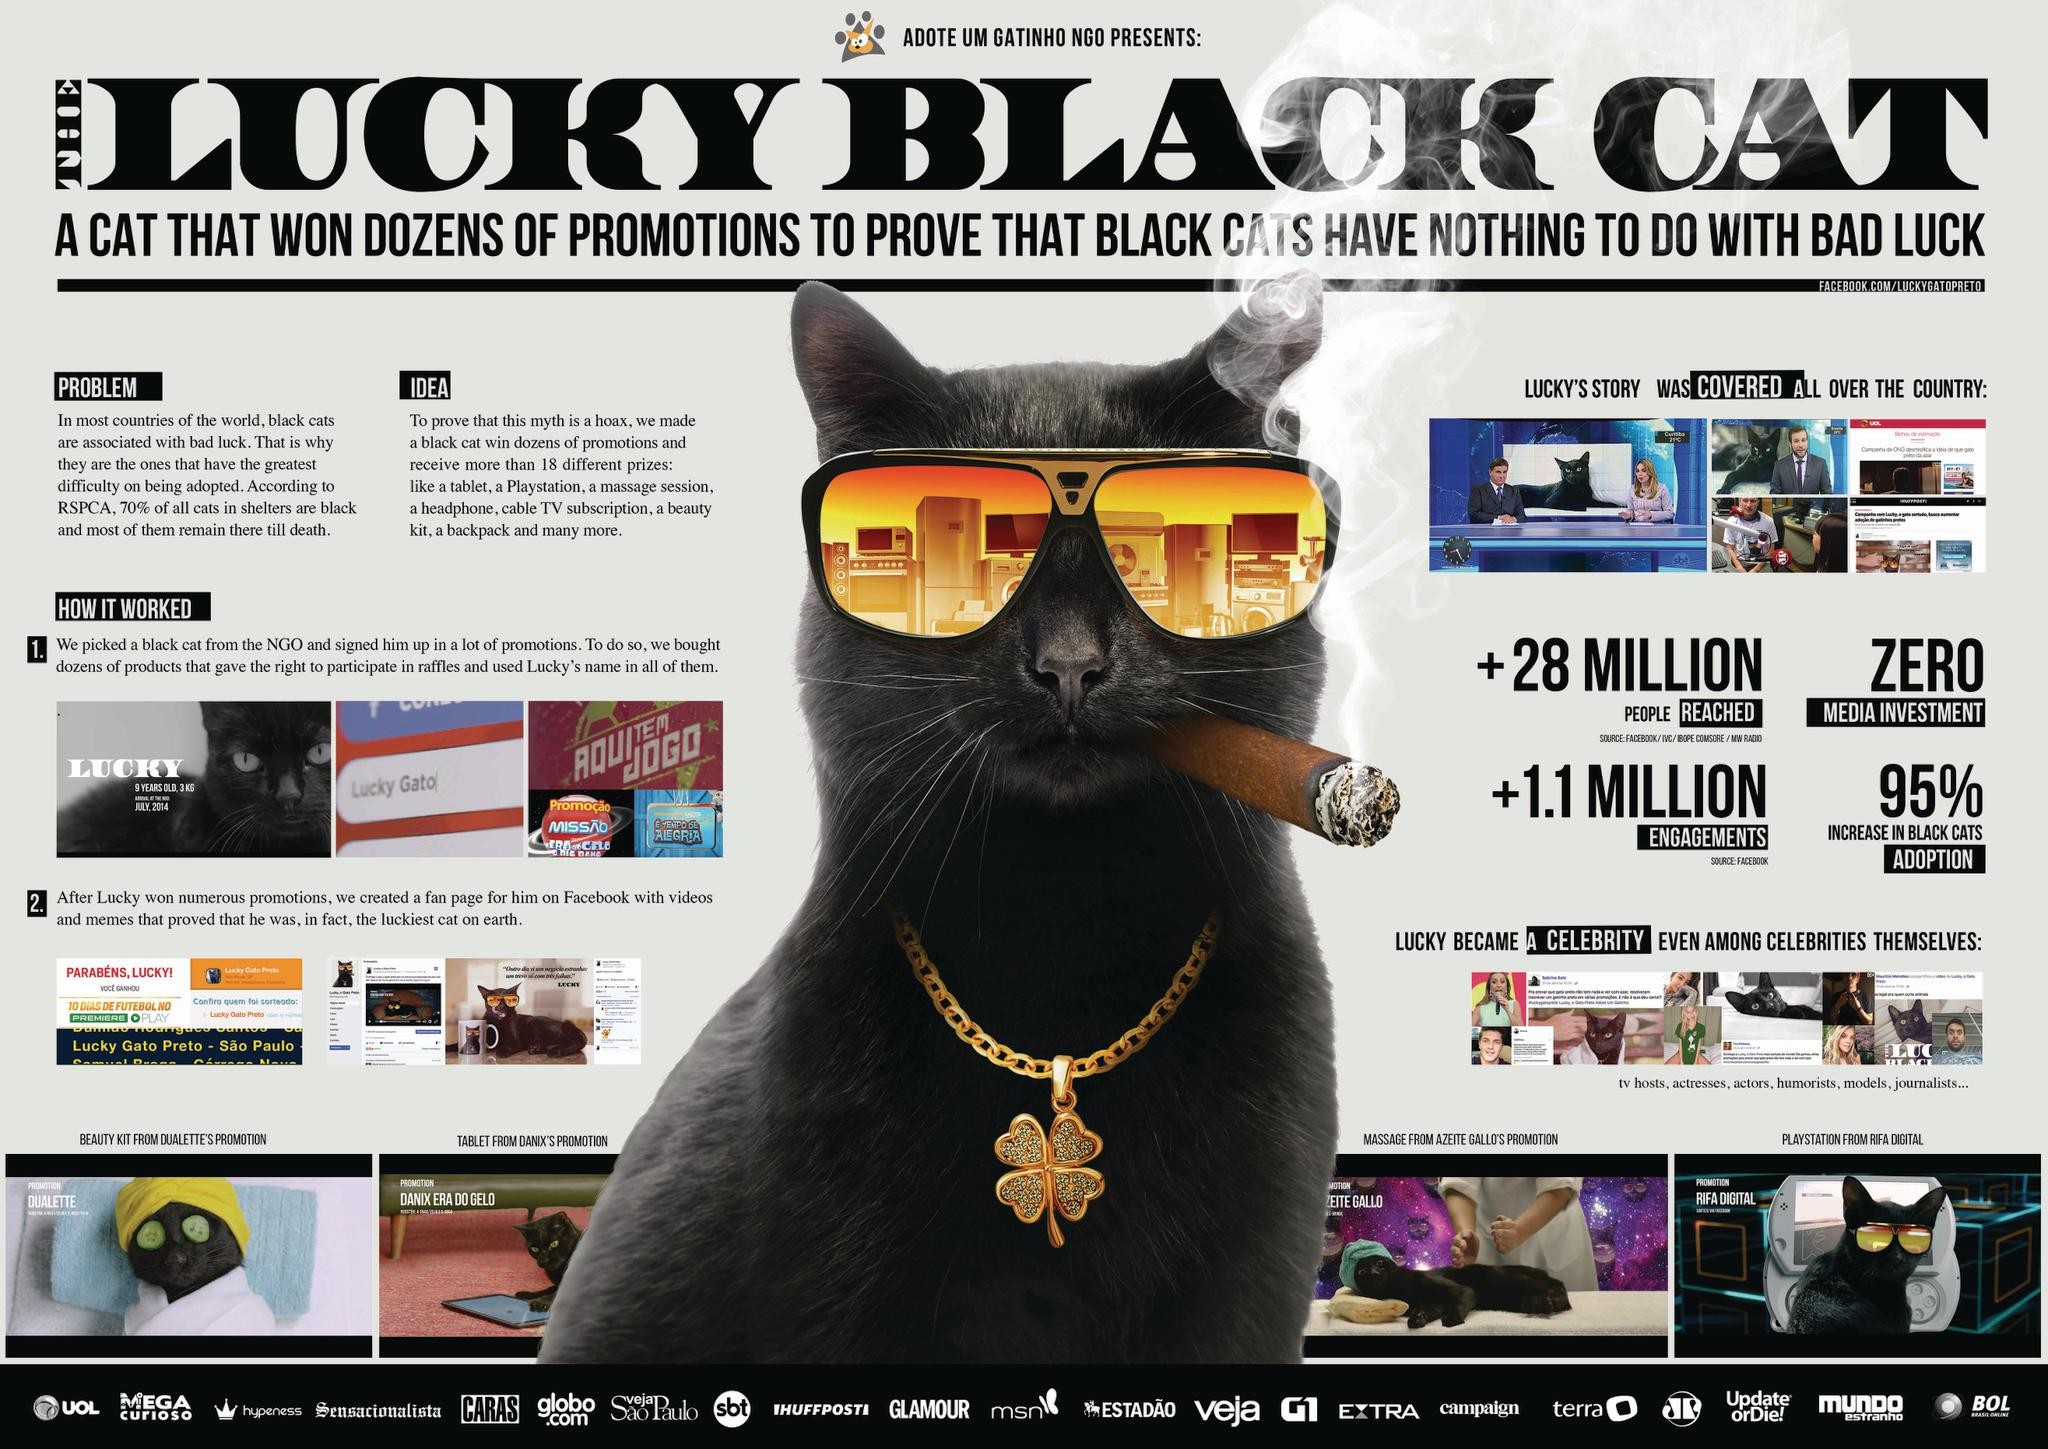 The Lucky Black Cat